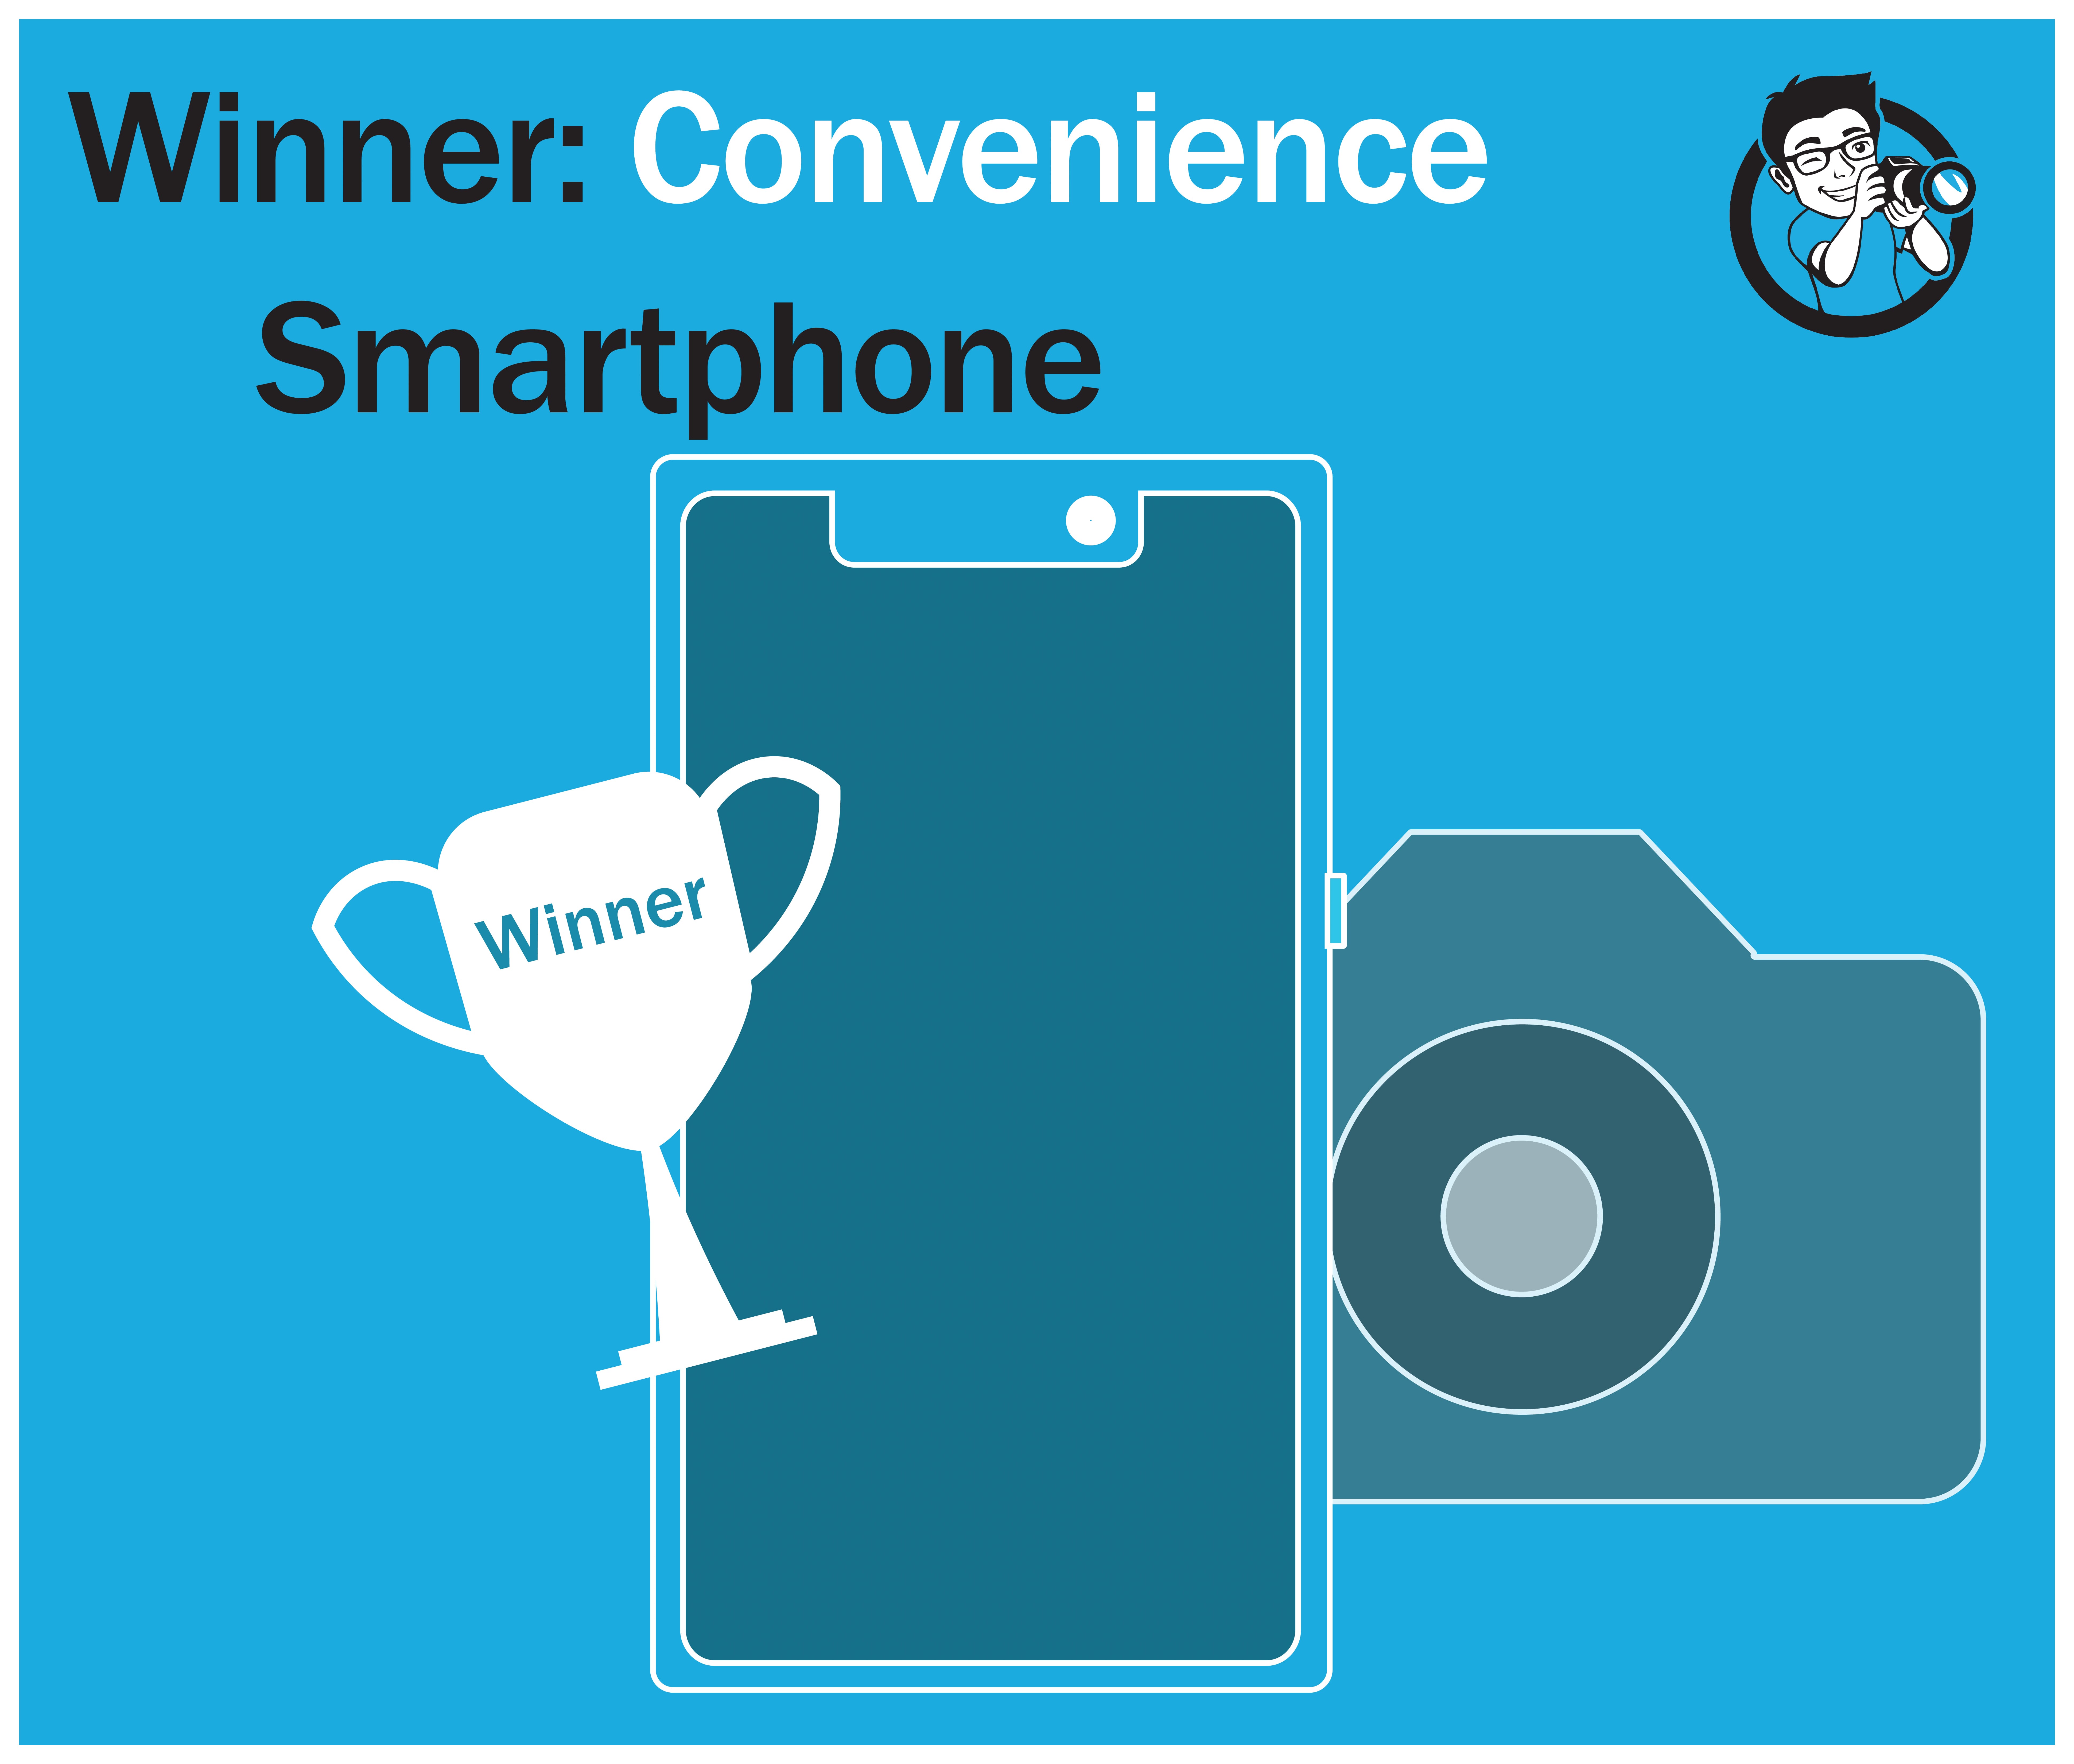 Winner convenience smartphone VS dslr